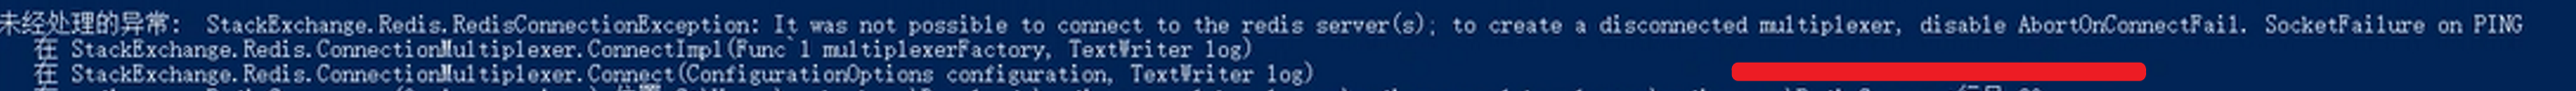 redis-copy使用6379端口无法连接到Redis服务器的问题